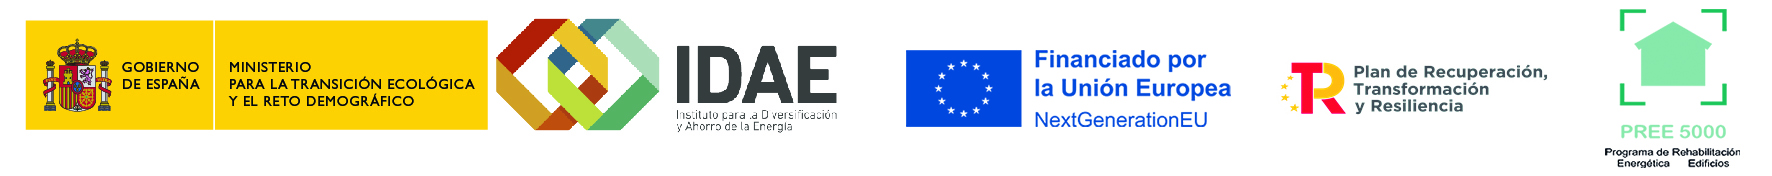 MINISTERIO - IDAE - UNION EUROPEA - PLAN DE RECUPERACION - PREE